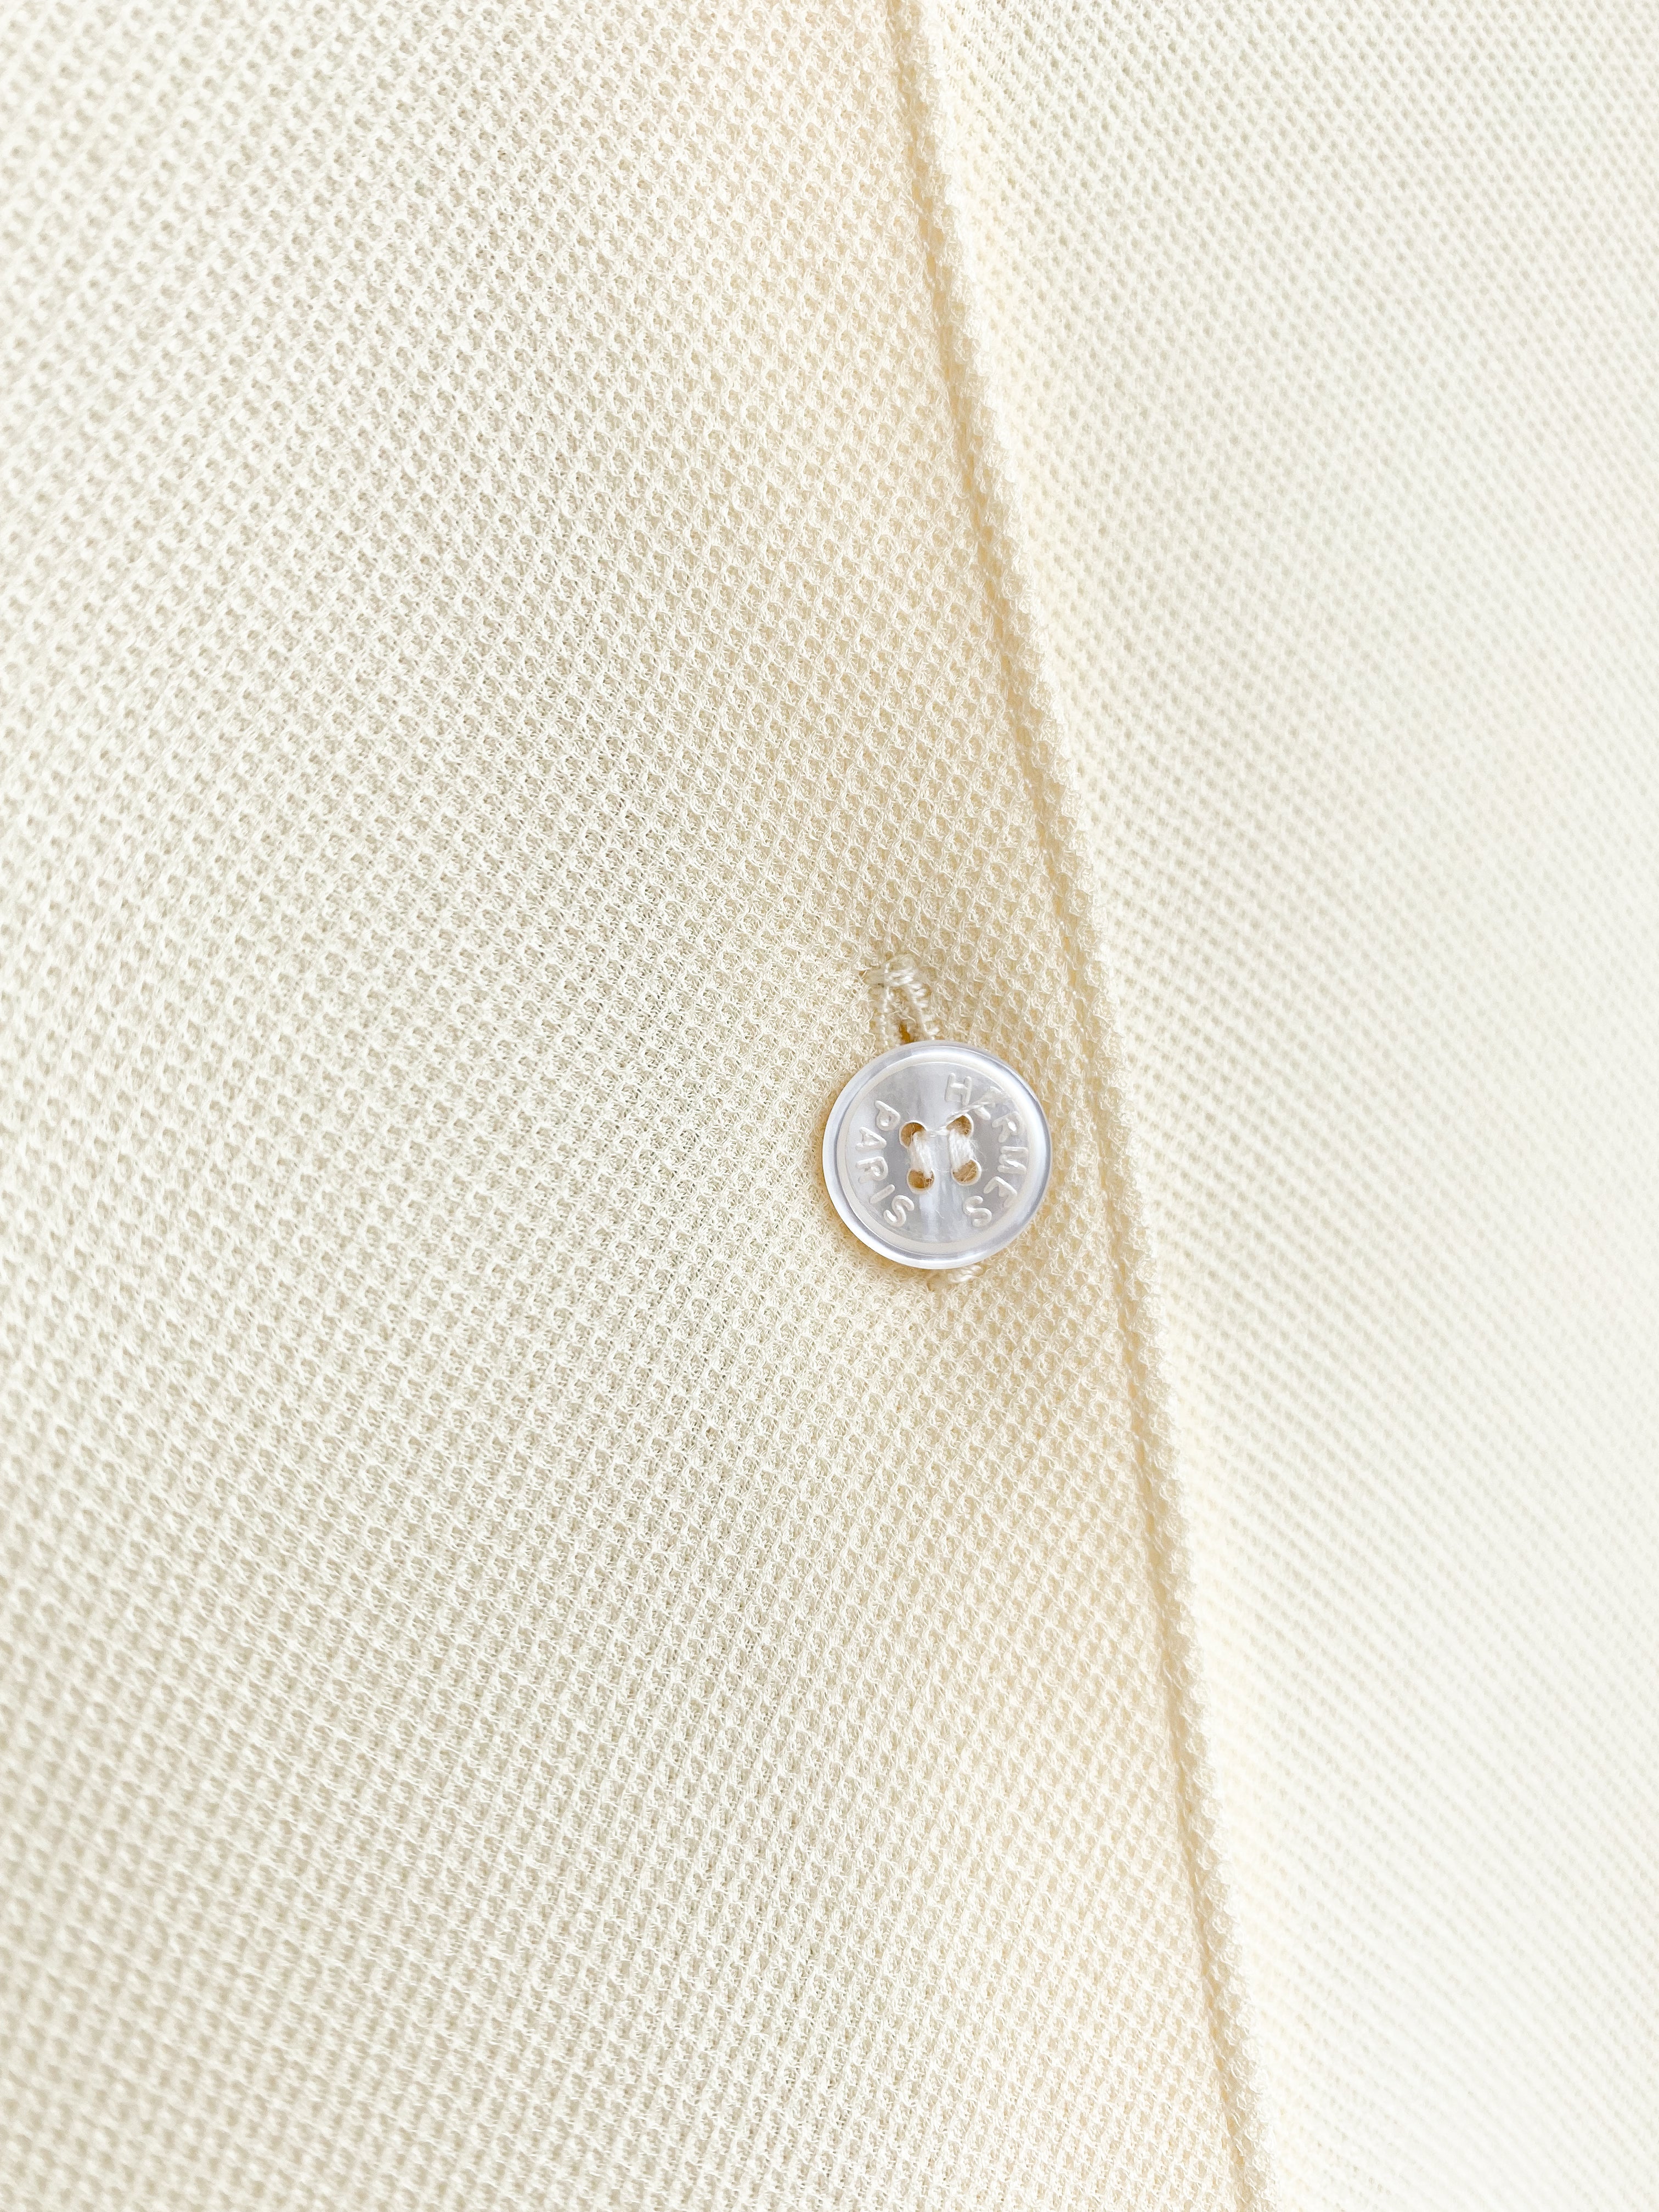 Hermès silk shirt